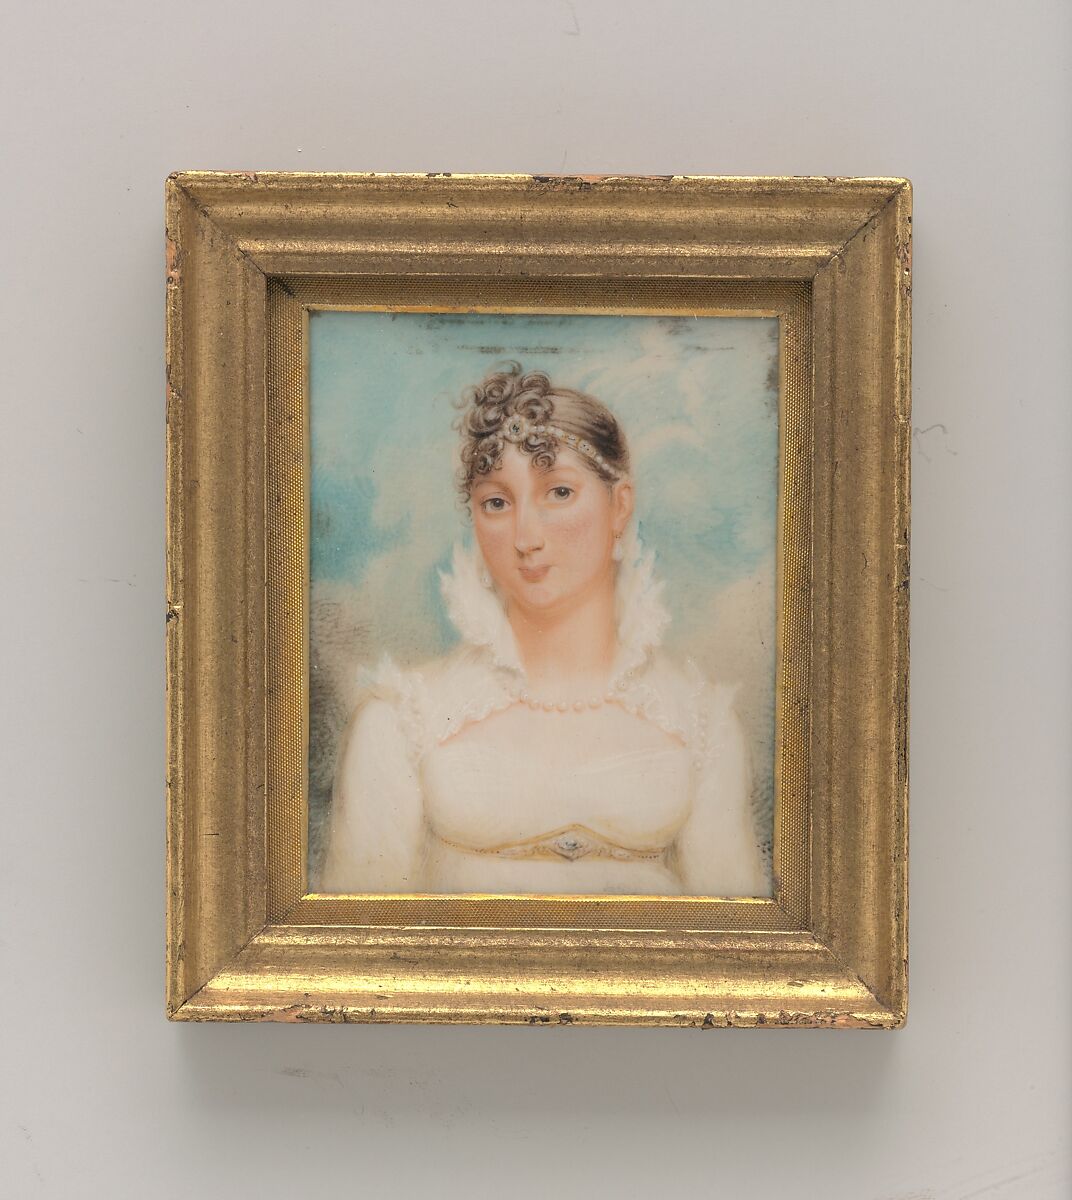 Mrs. Stephen Van Rensselaer III (Cornelia Paterson), Robert Fulton (American, Little Britain, Pennsylvania 1765–1815 New York), Watercolor on ivory, American 